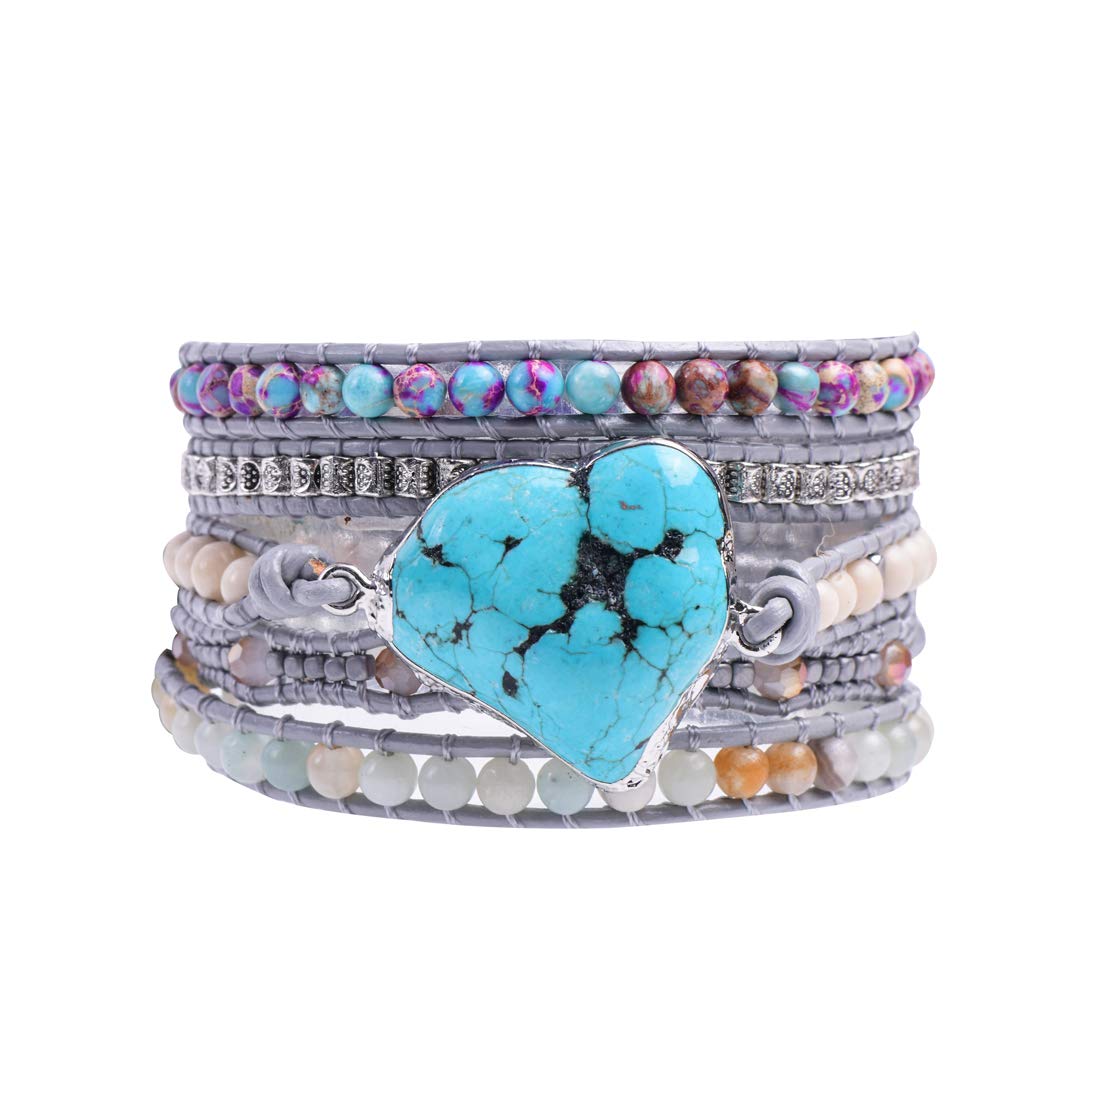 YGLINE Handmade Wrap Bracelet Turquoise, Jasper & Amazonite Natural Stones Leather Charm 5 Strands Boho Bracelet